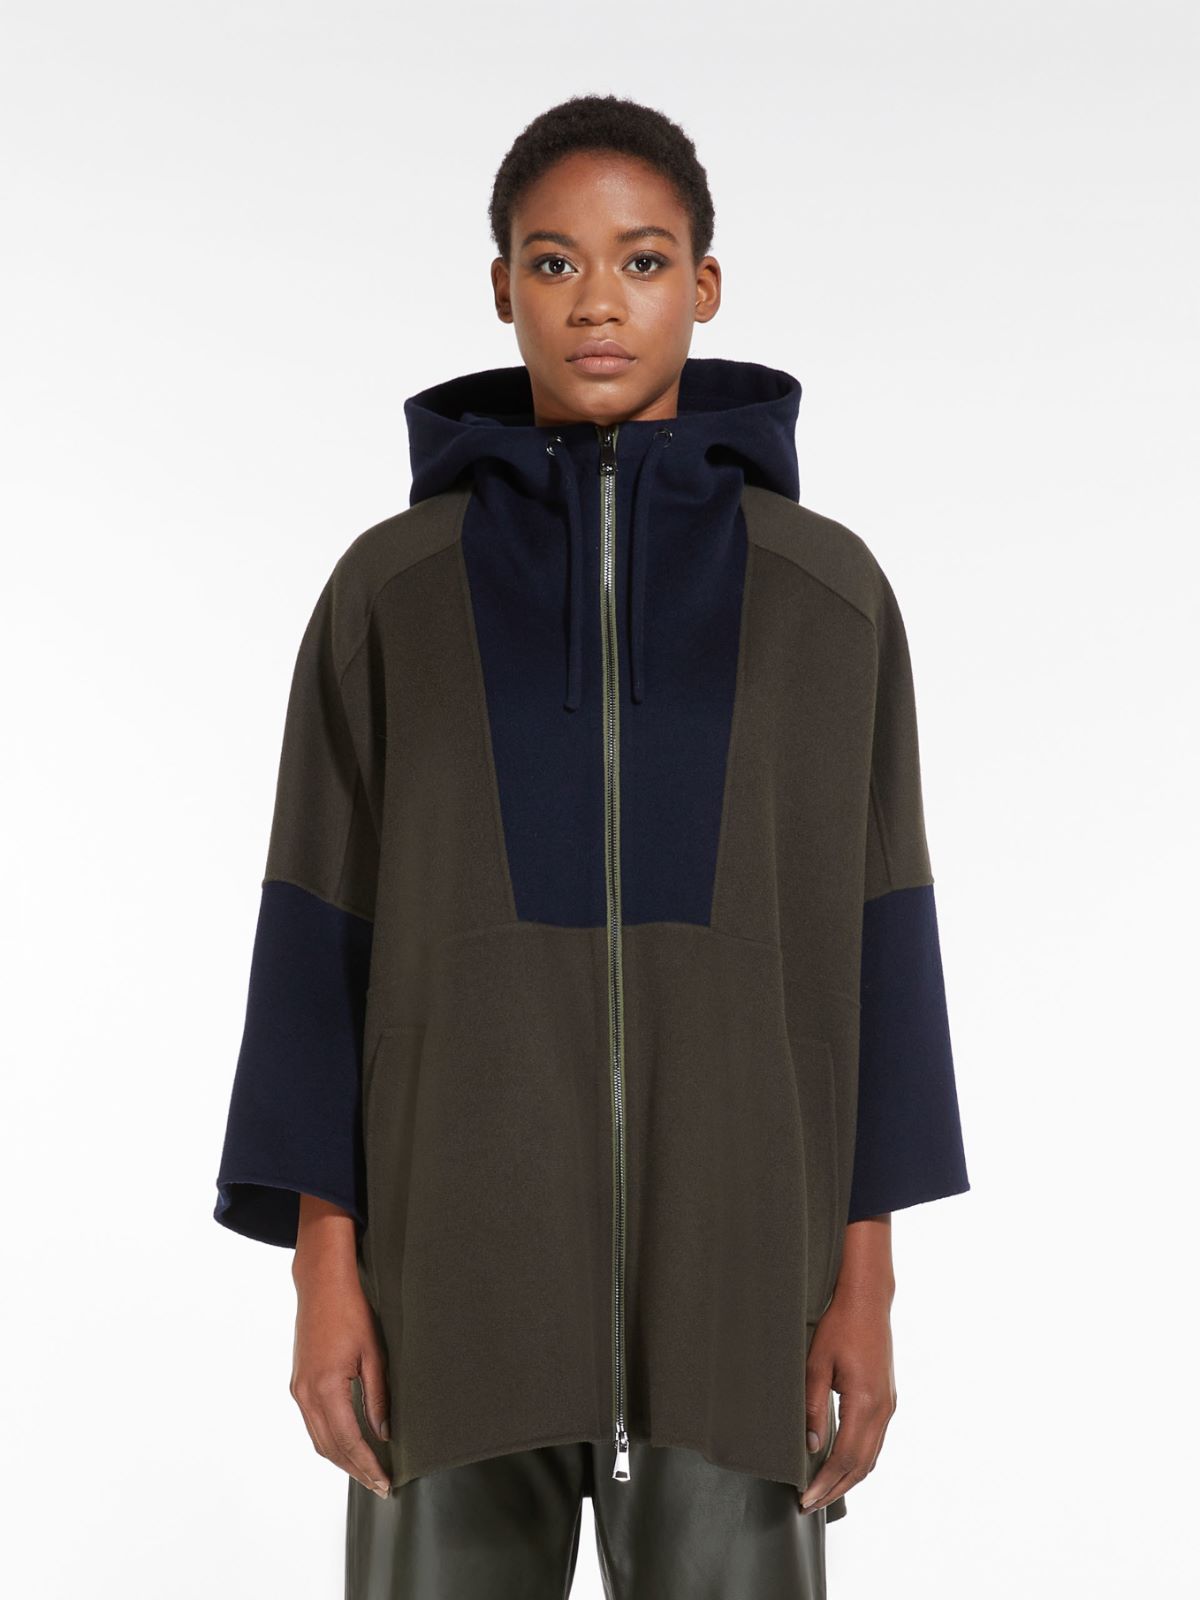 Oversized jacket in wool, kaki | Weekend Max Mara